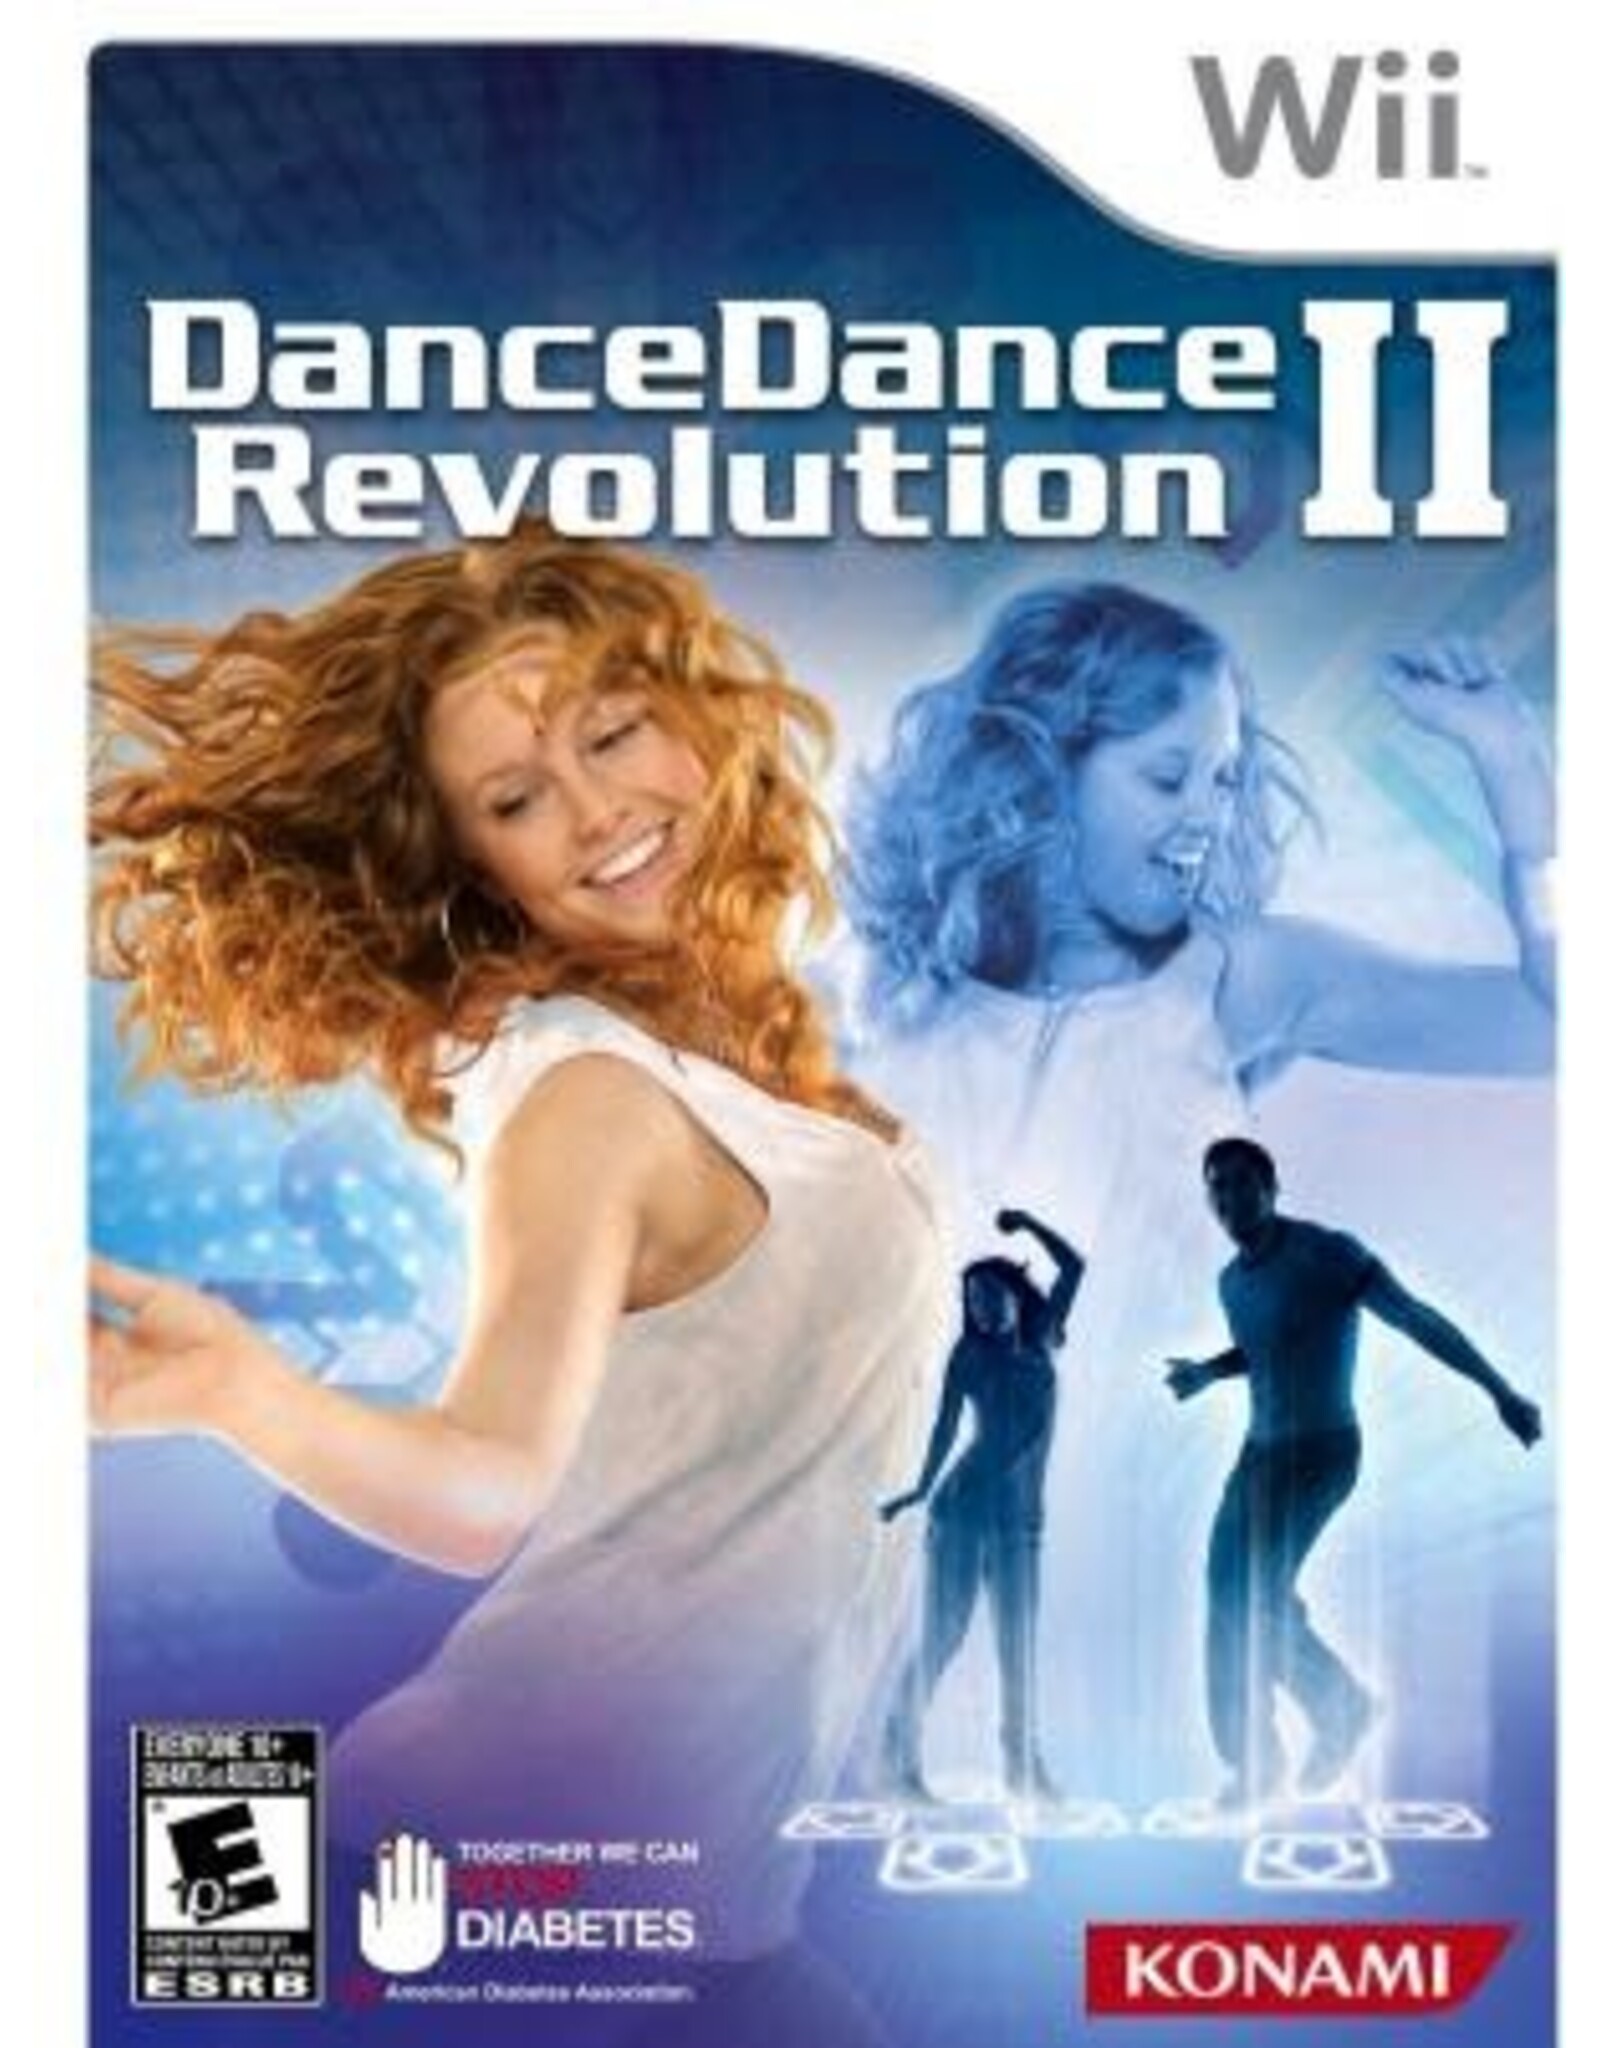 Wii Dance Dance Revolution II (CiB)